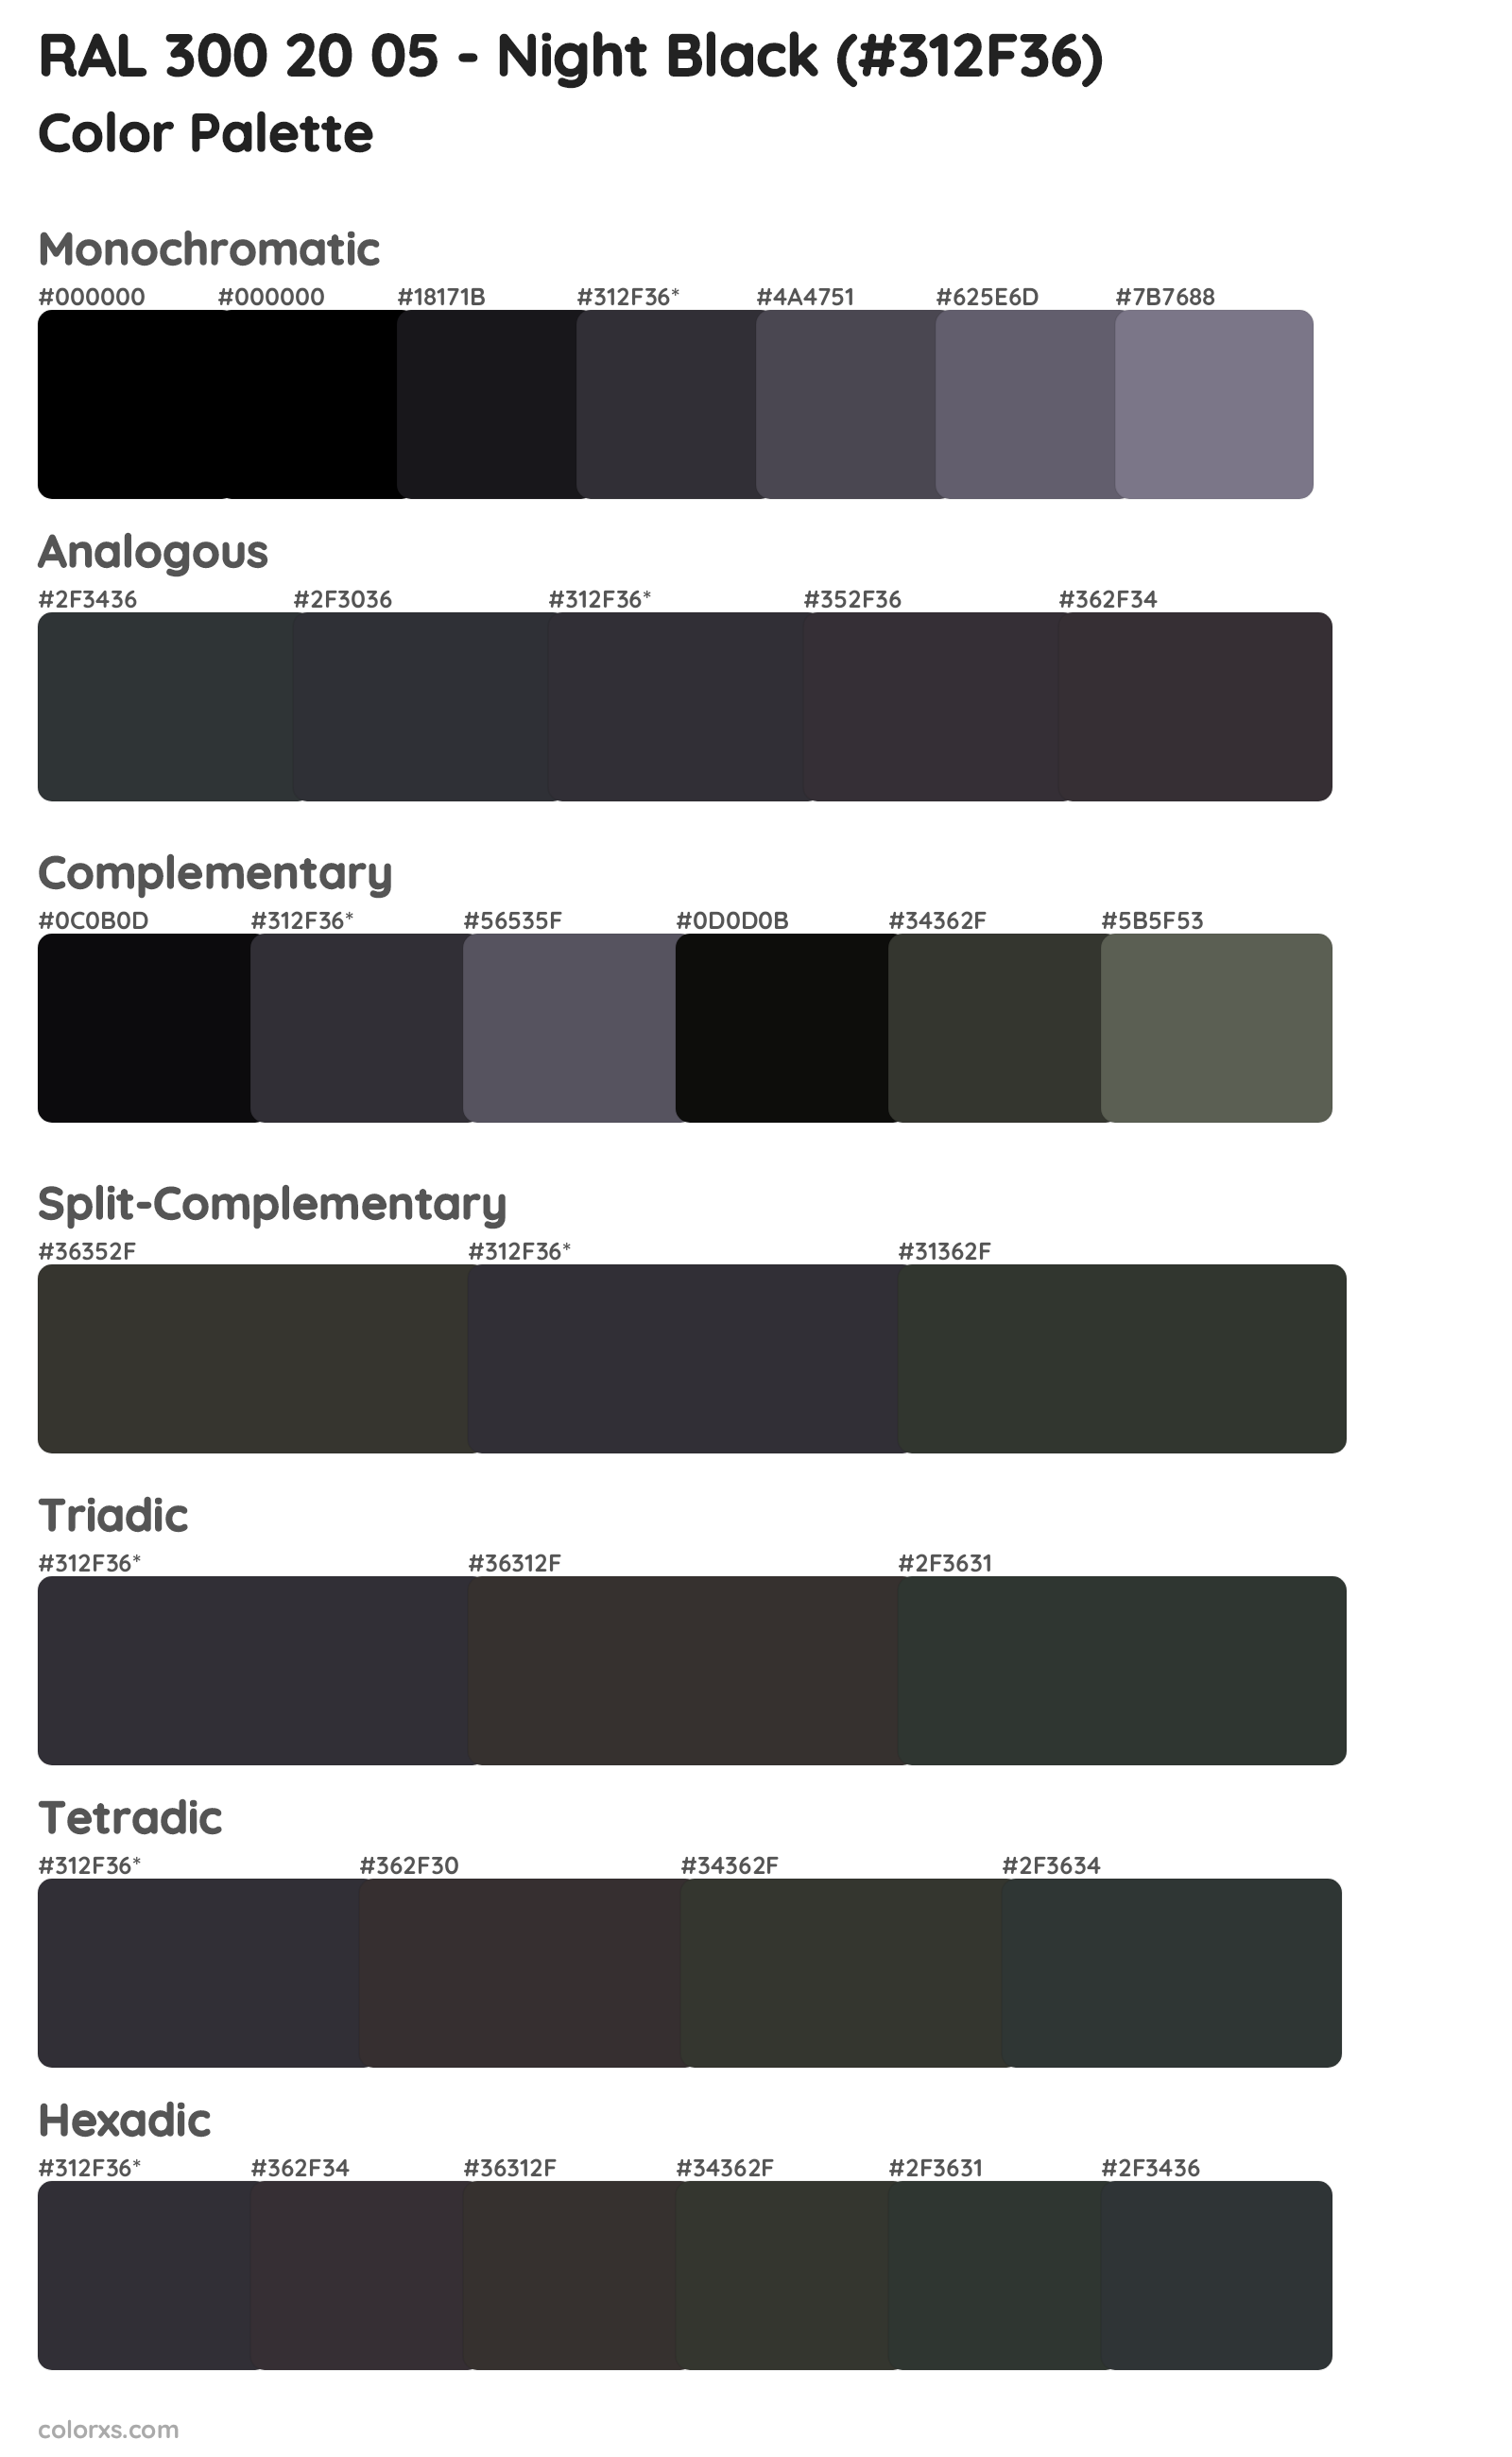 RAL 300 20 05 - Night Black Color Scheme Palettes